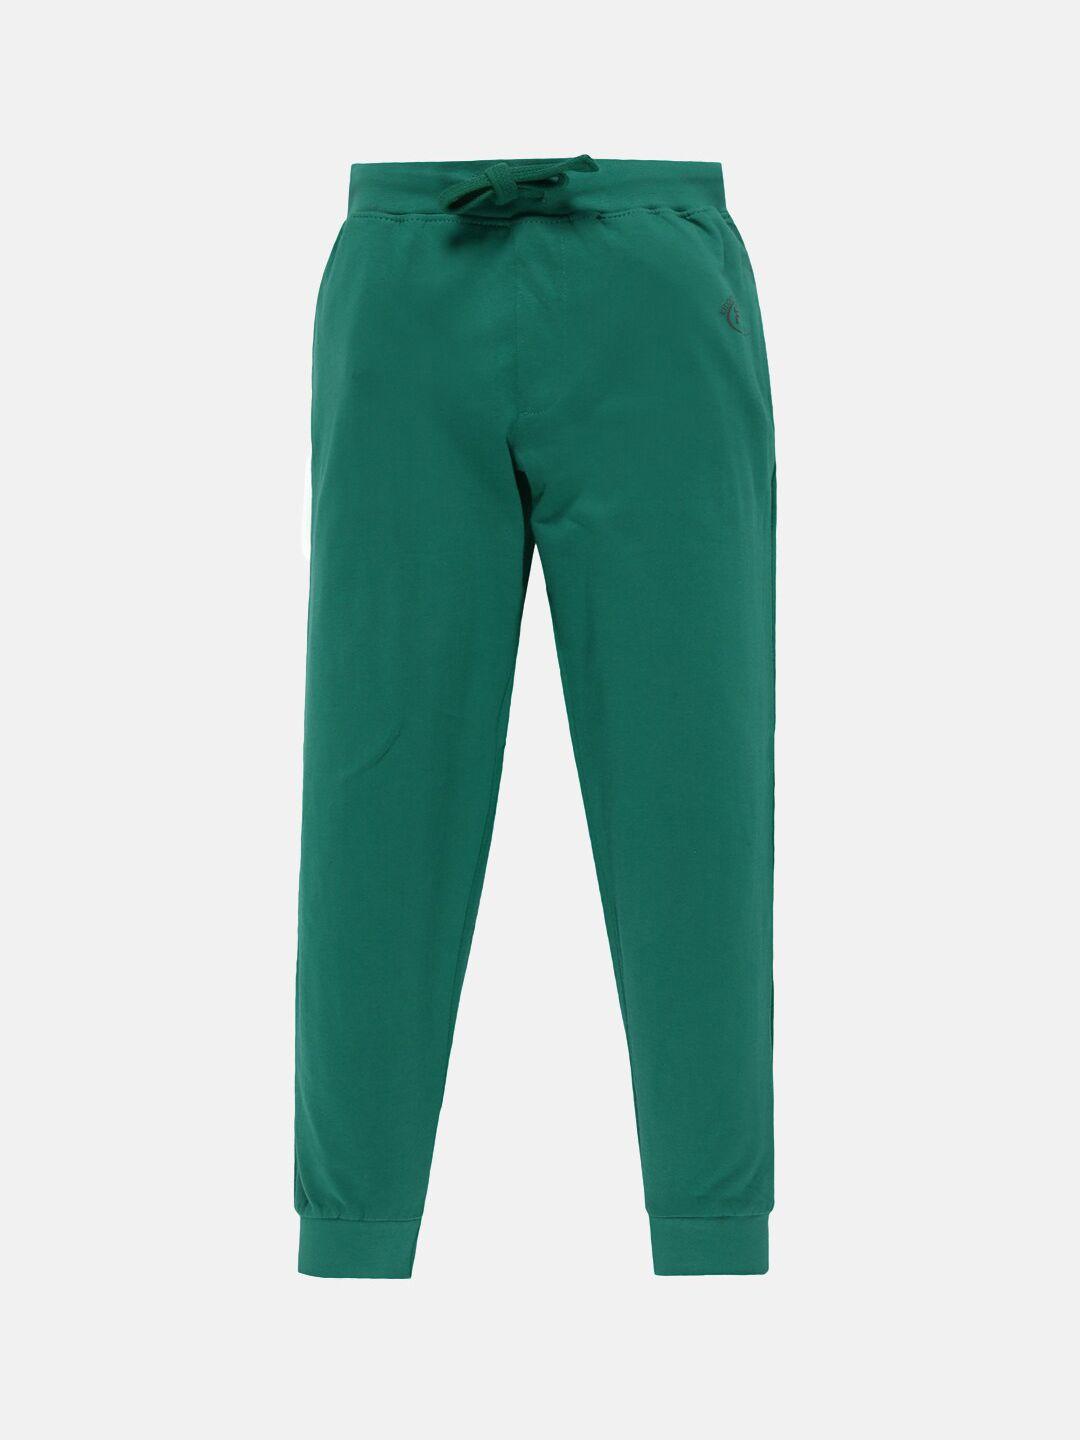 kiddopanti unisex kids green solid pure cotton track pants